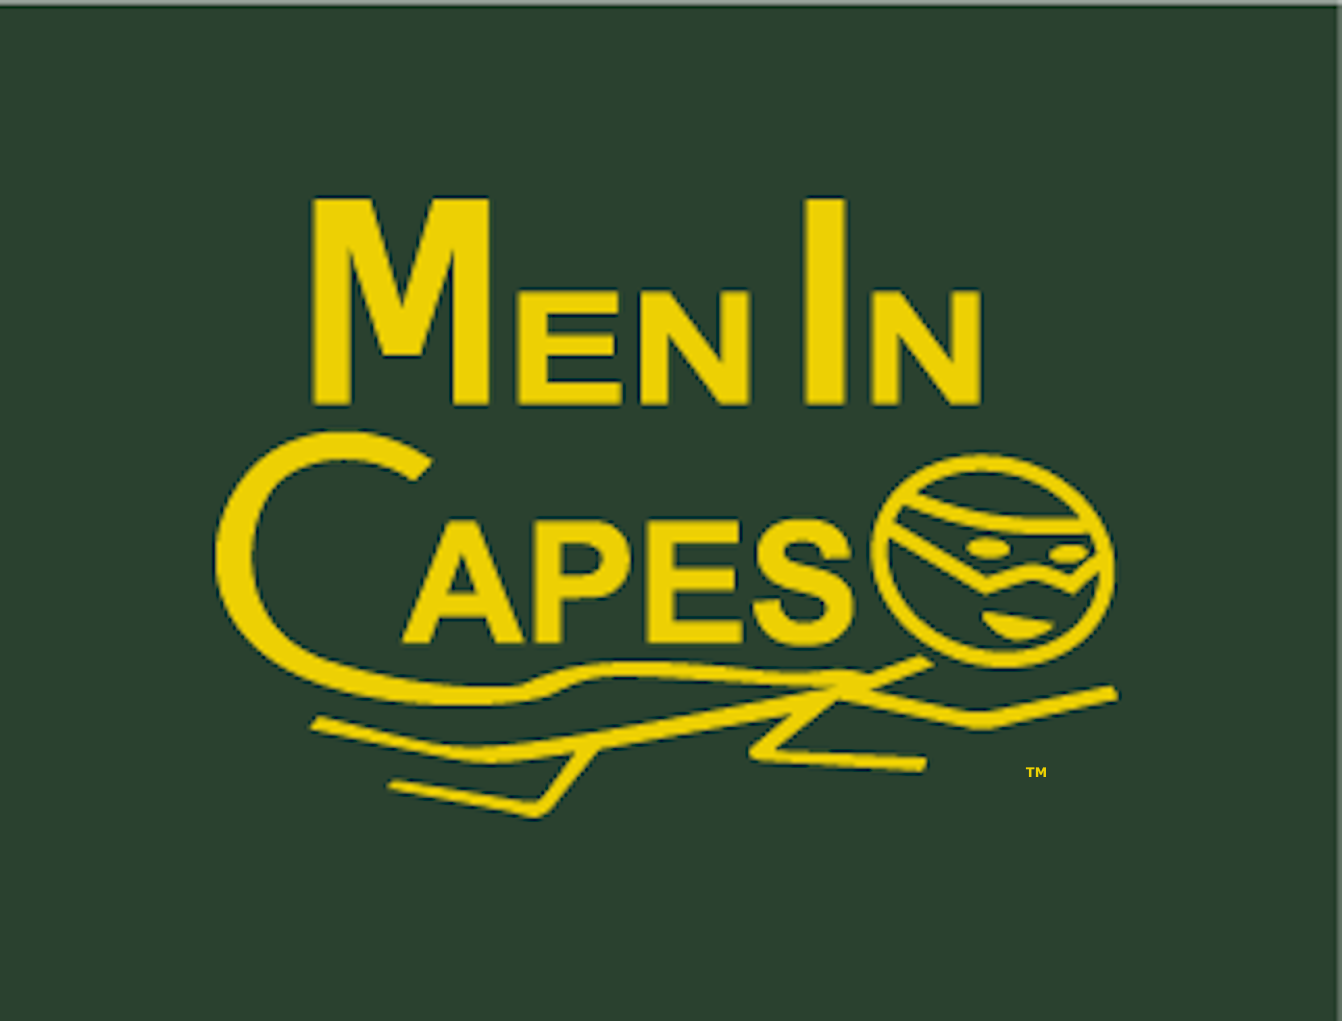 Men In Capes, Inc